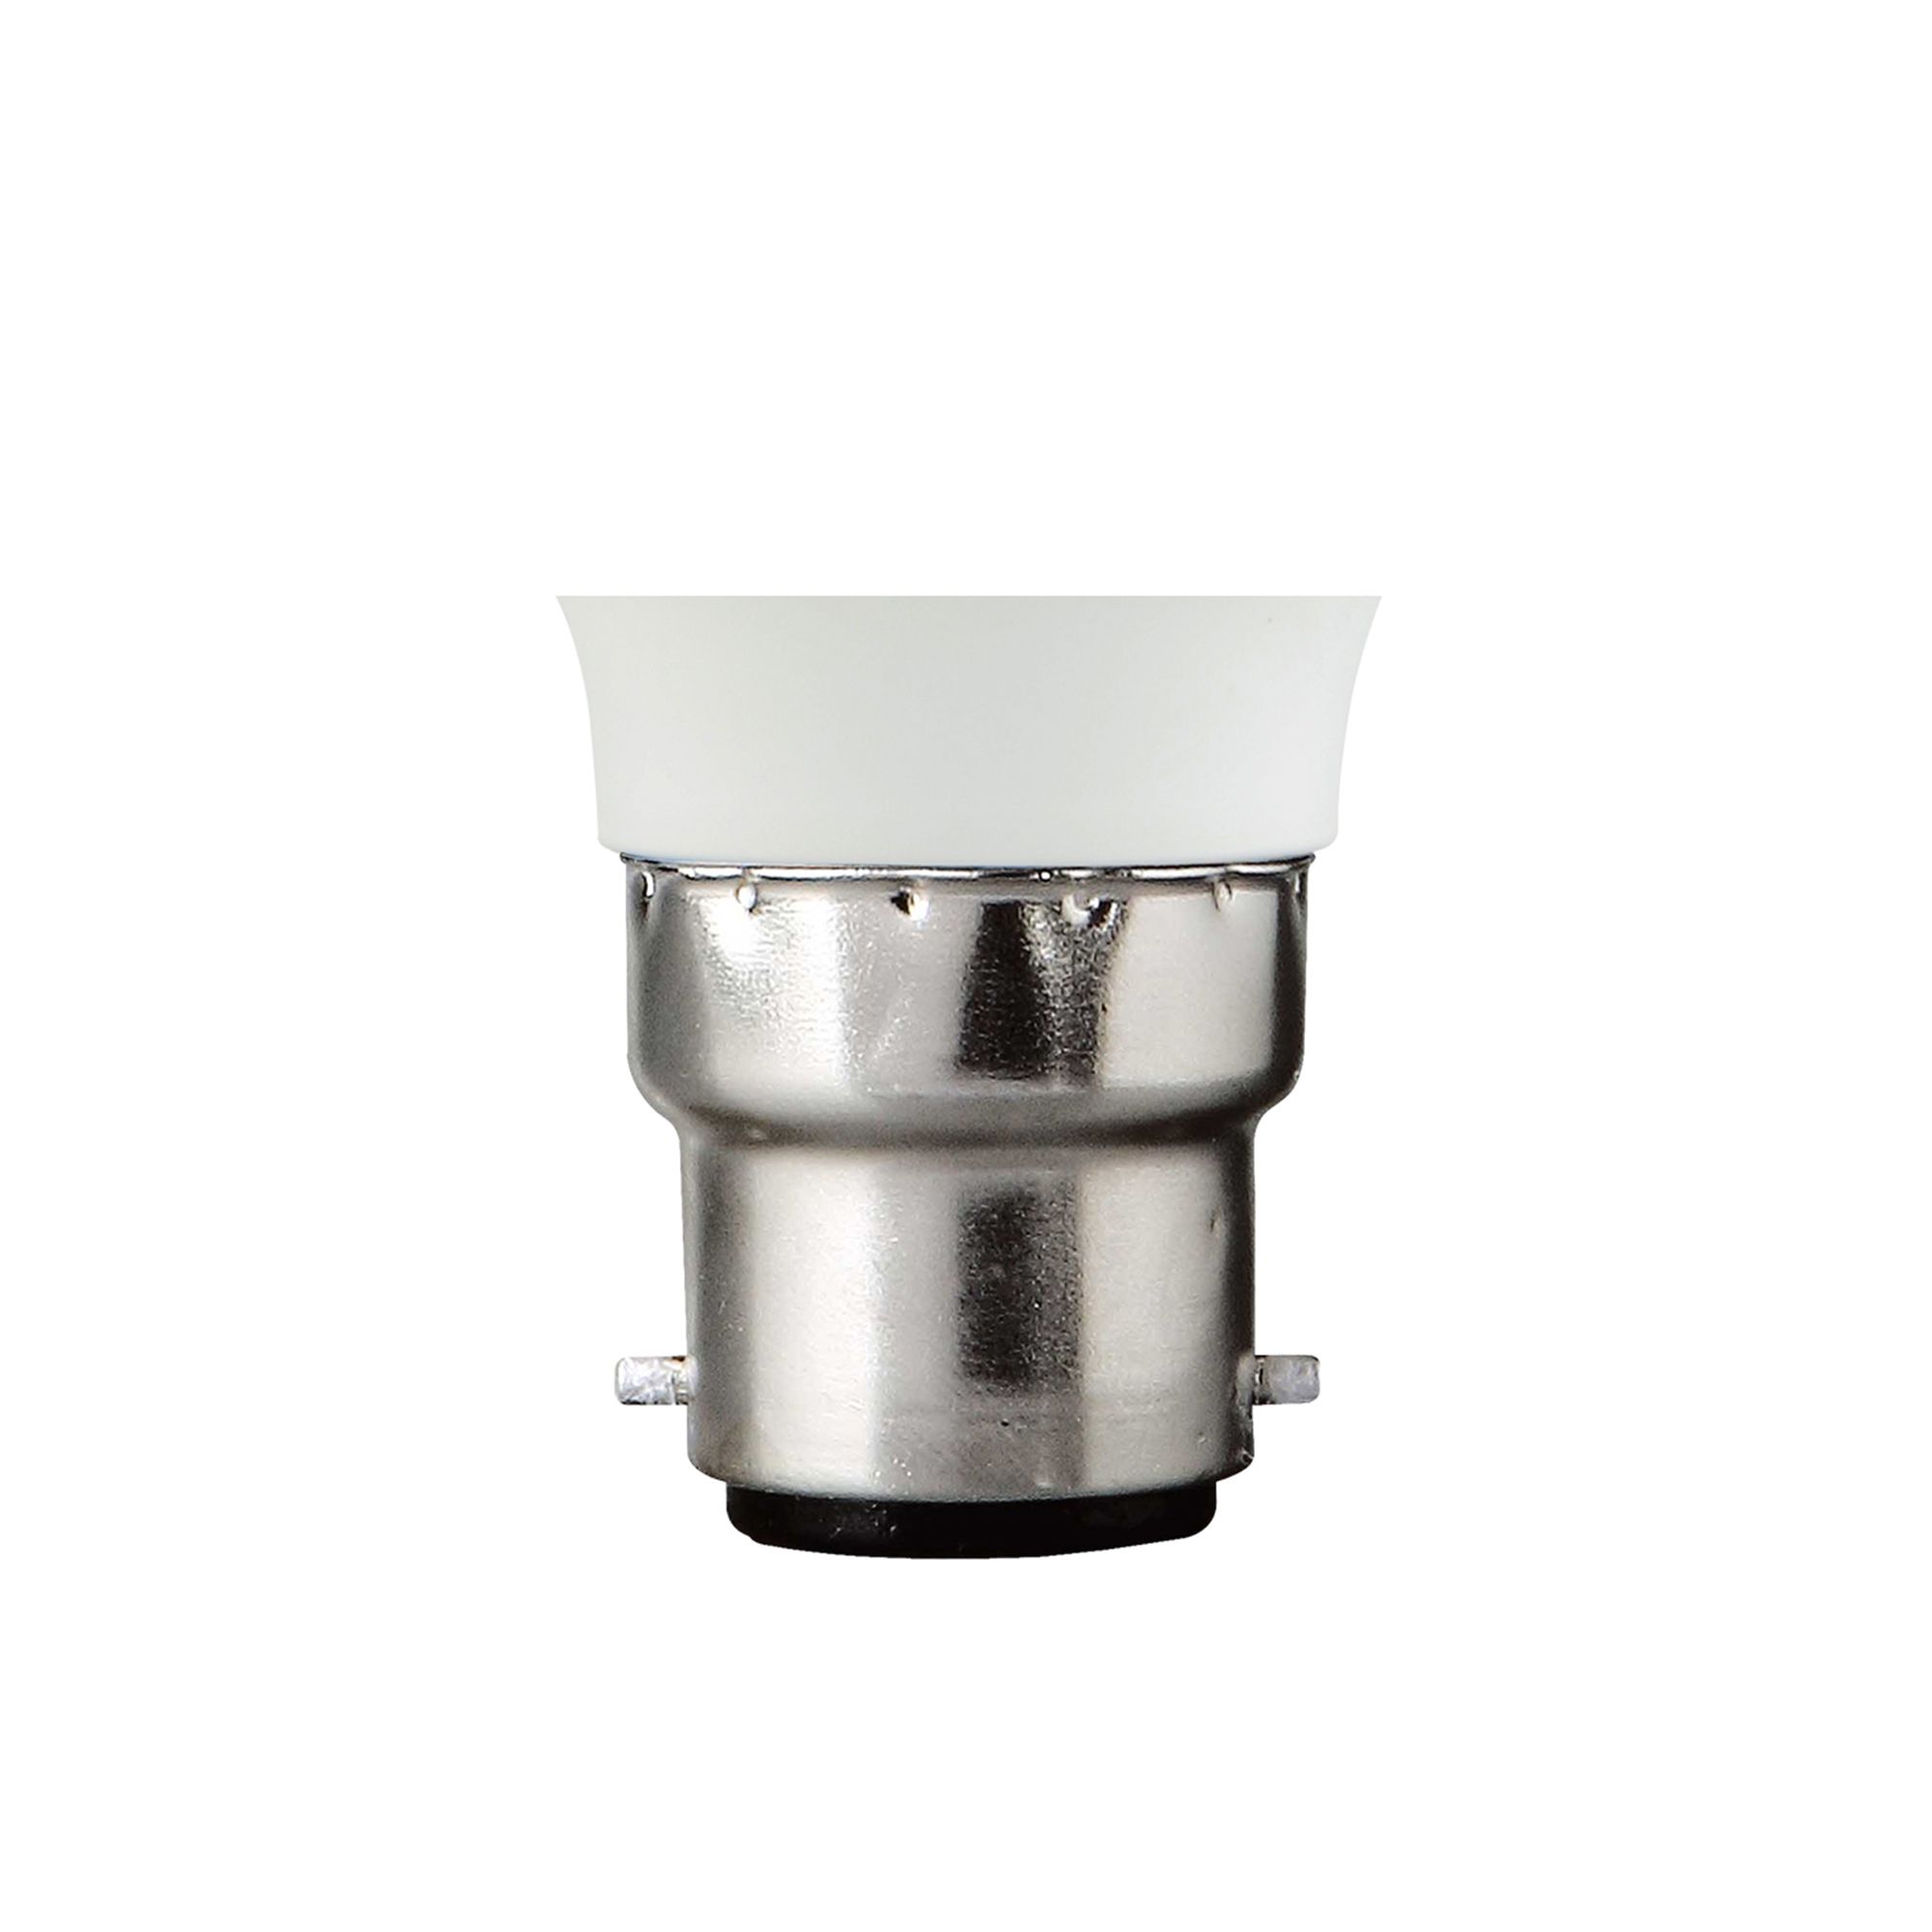 Diall B22 2.2W 250lm Frosted Mini globe Warm white LED Light bulb